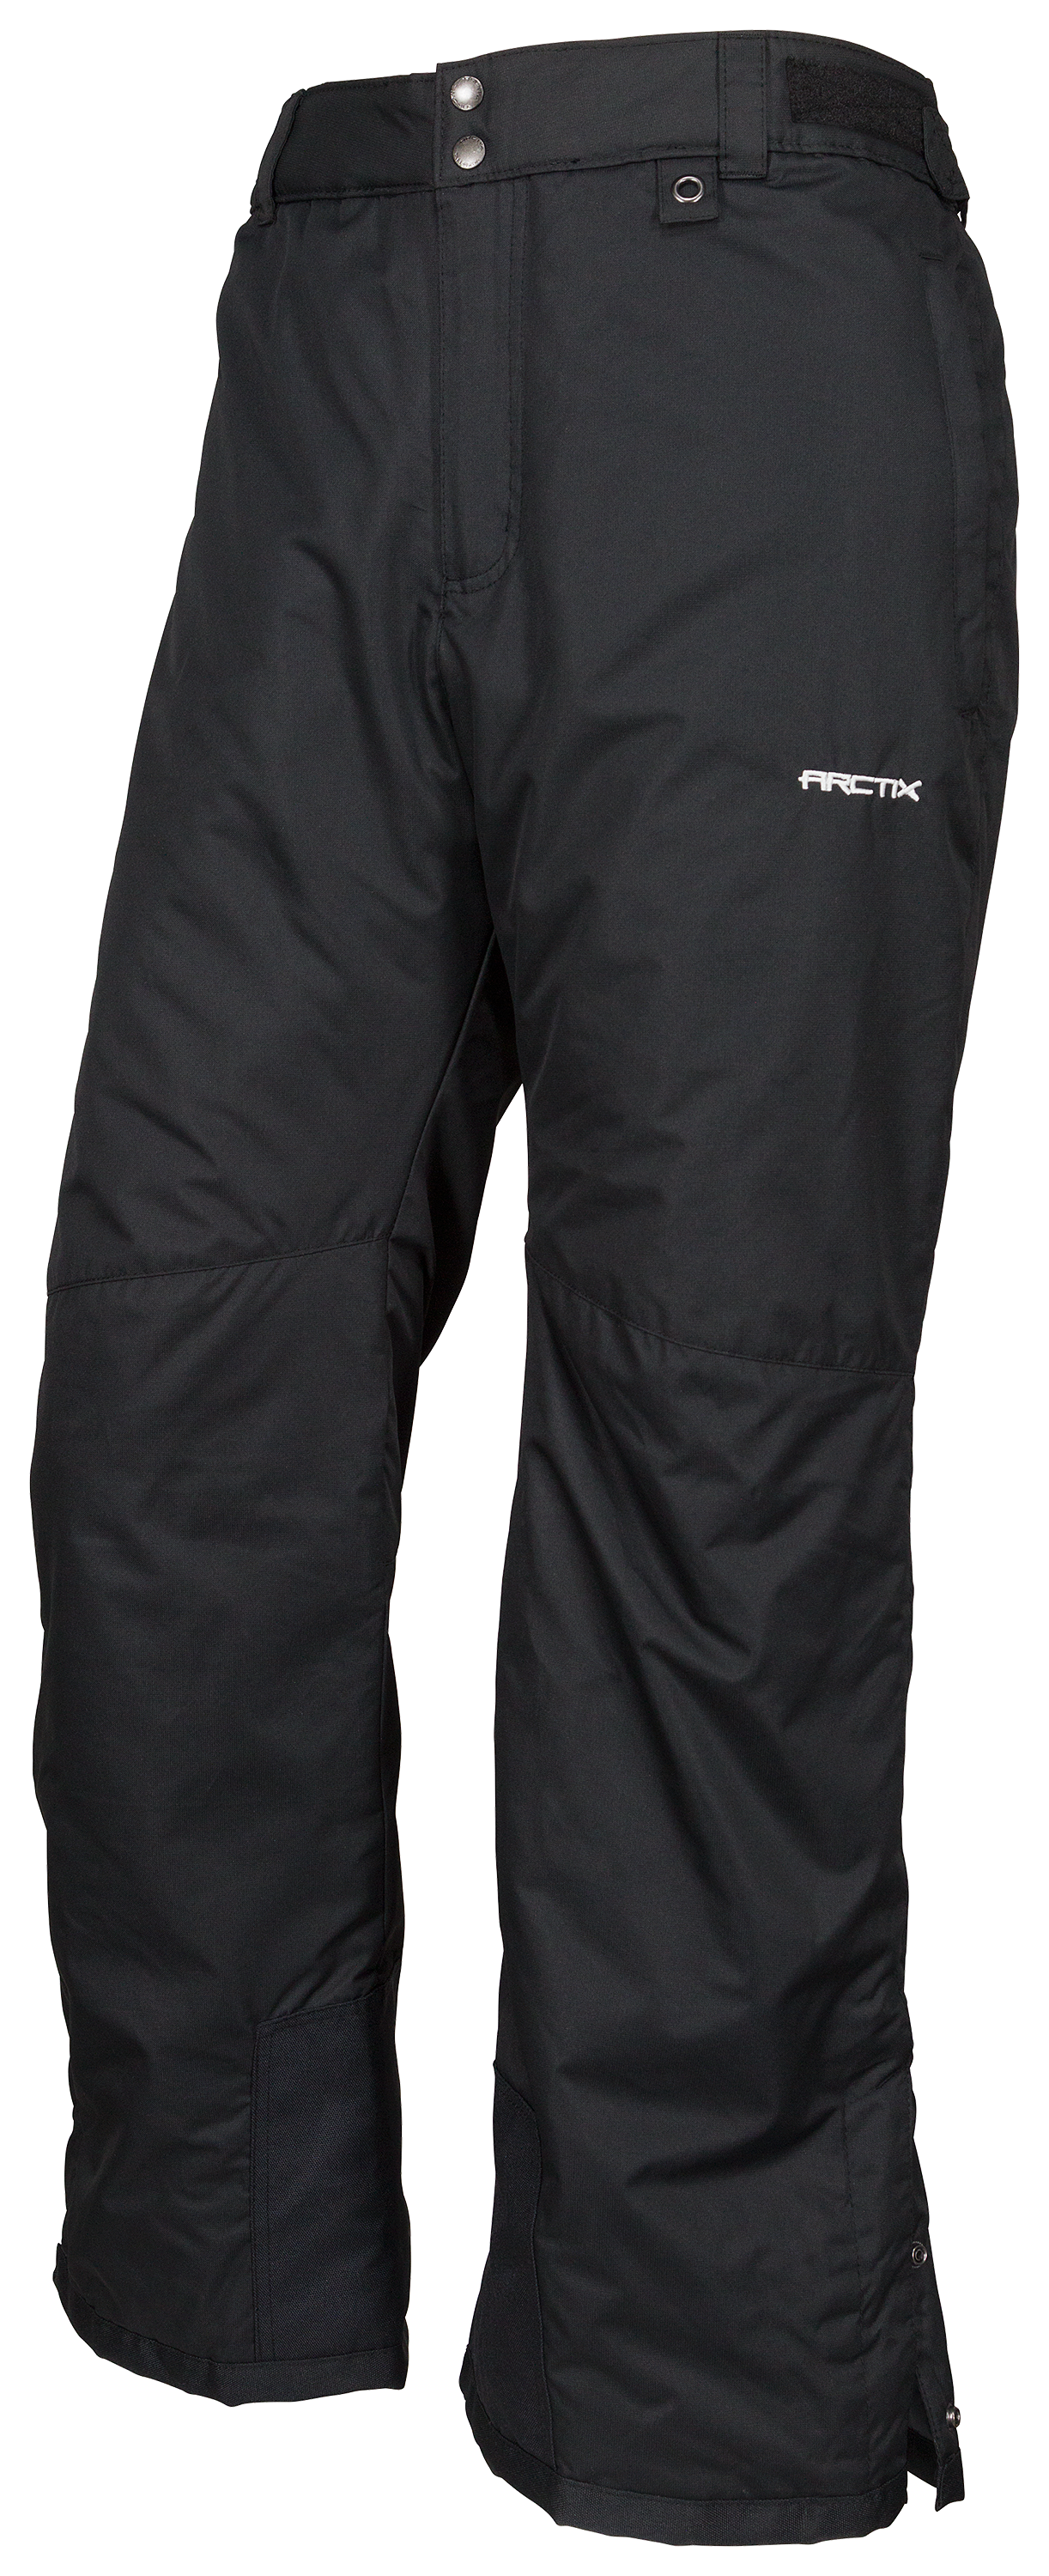 Arctix Black Snow Pants - Size 8 - Brand New!